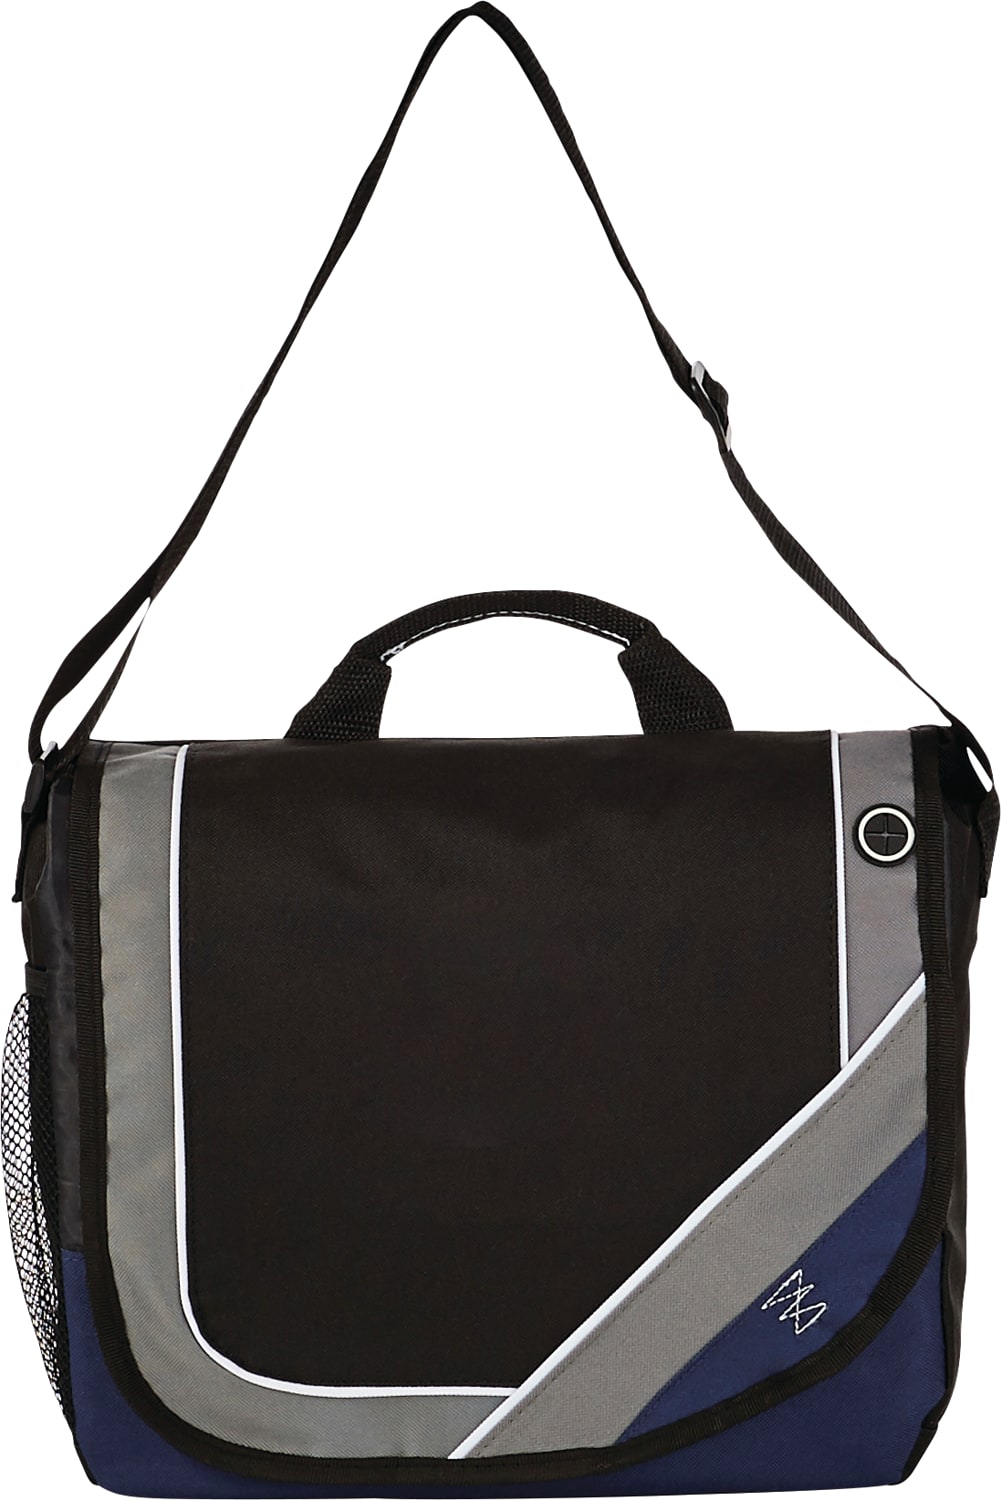 Bolt Urban Messenger Bag